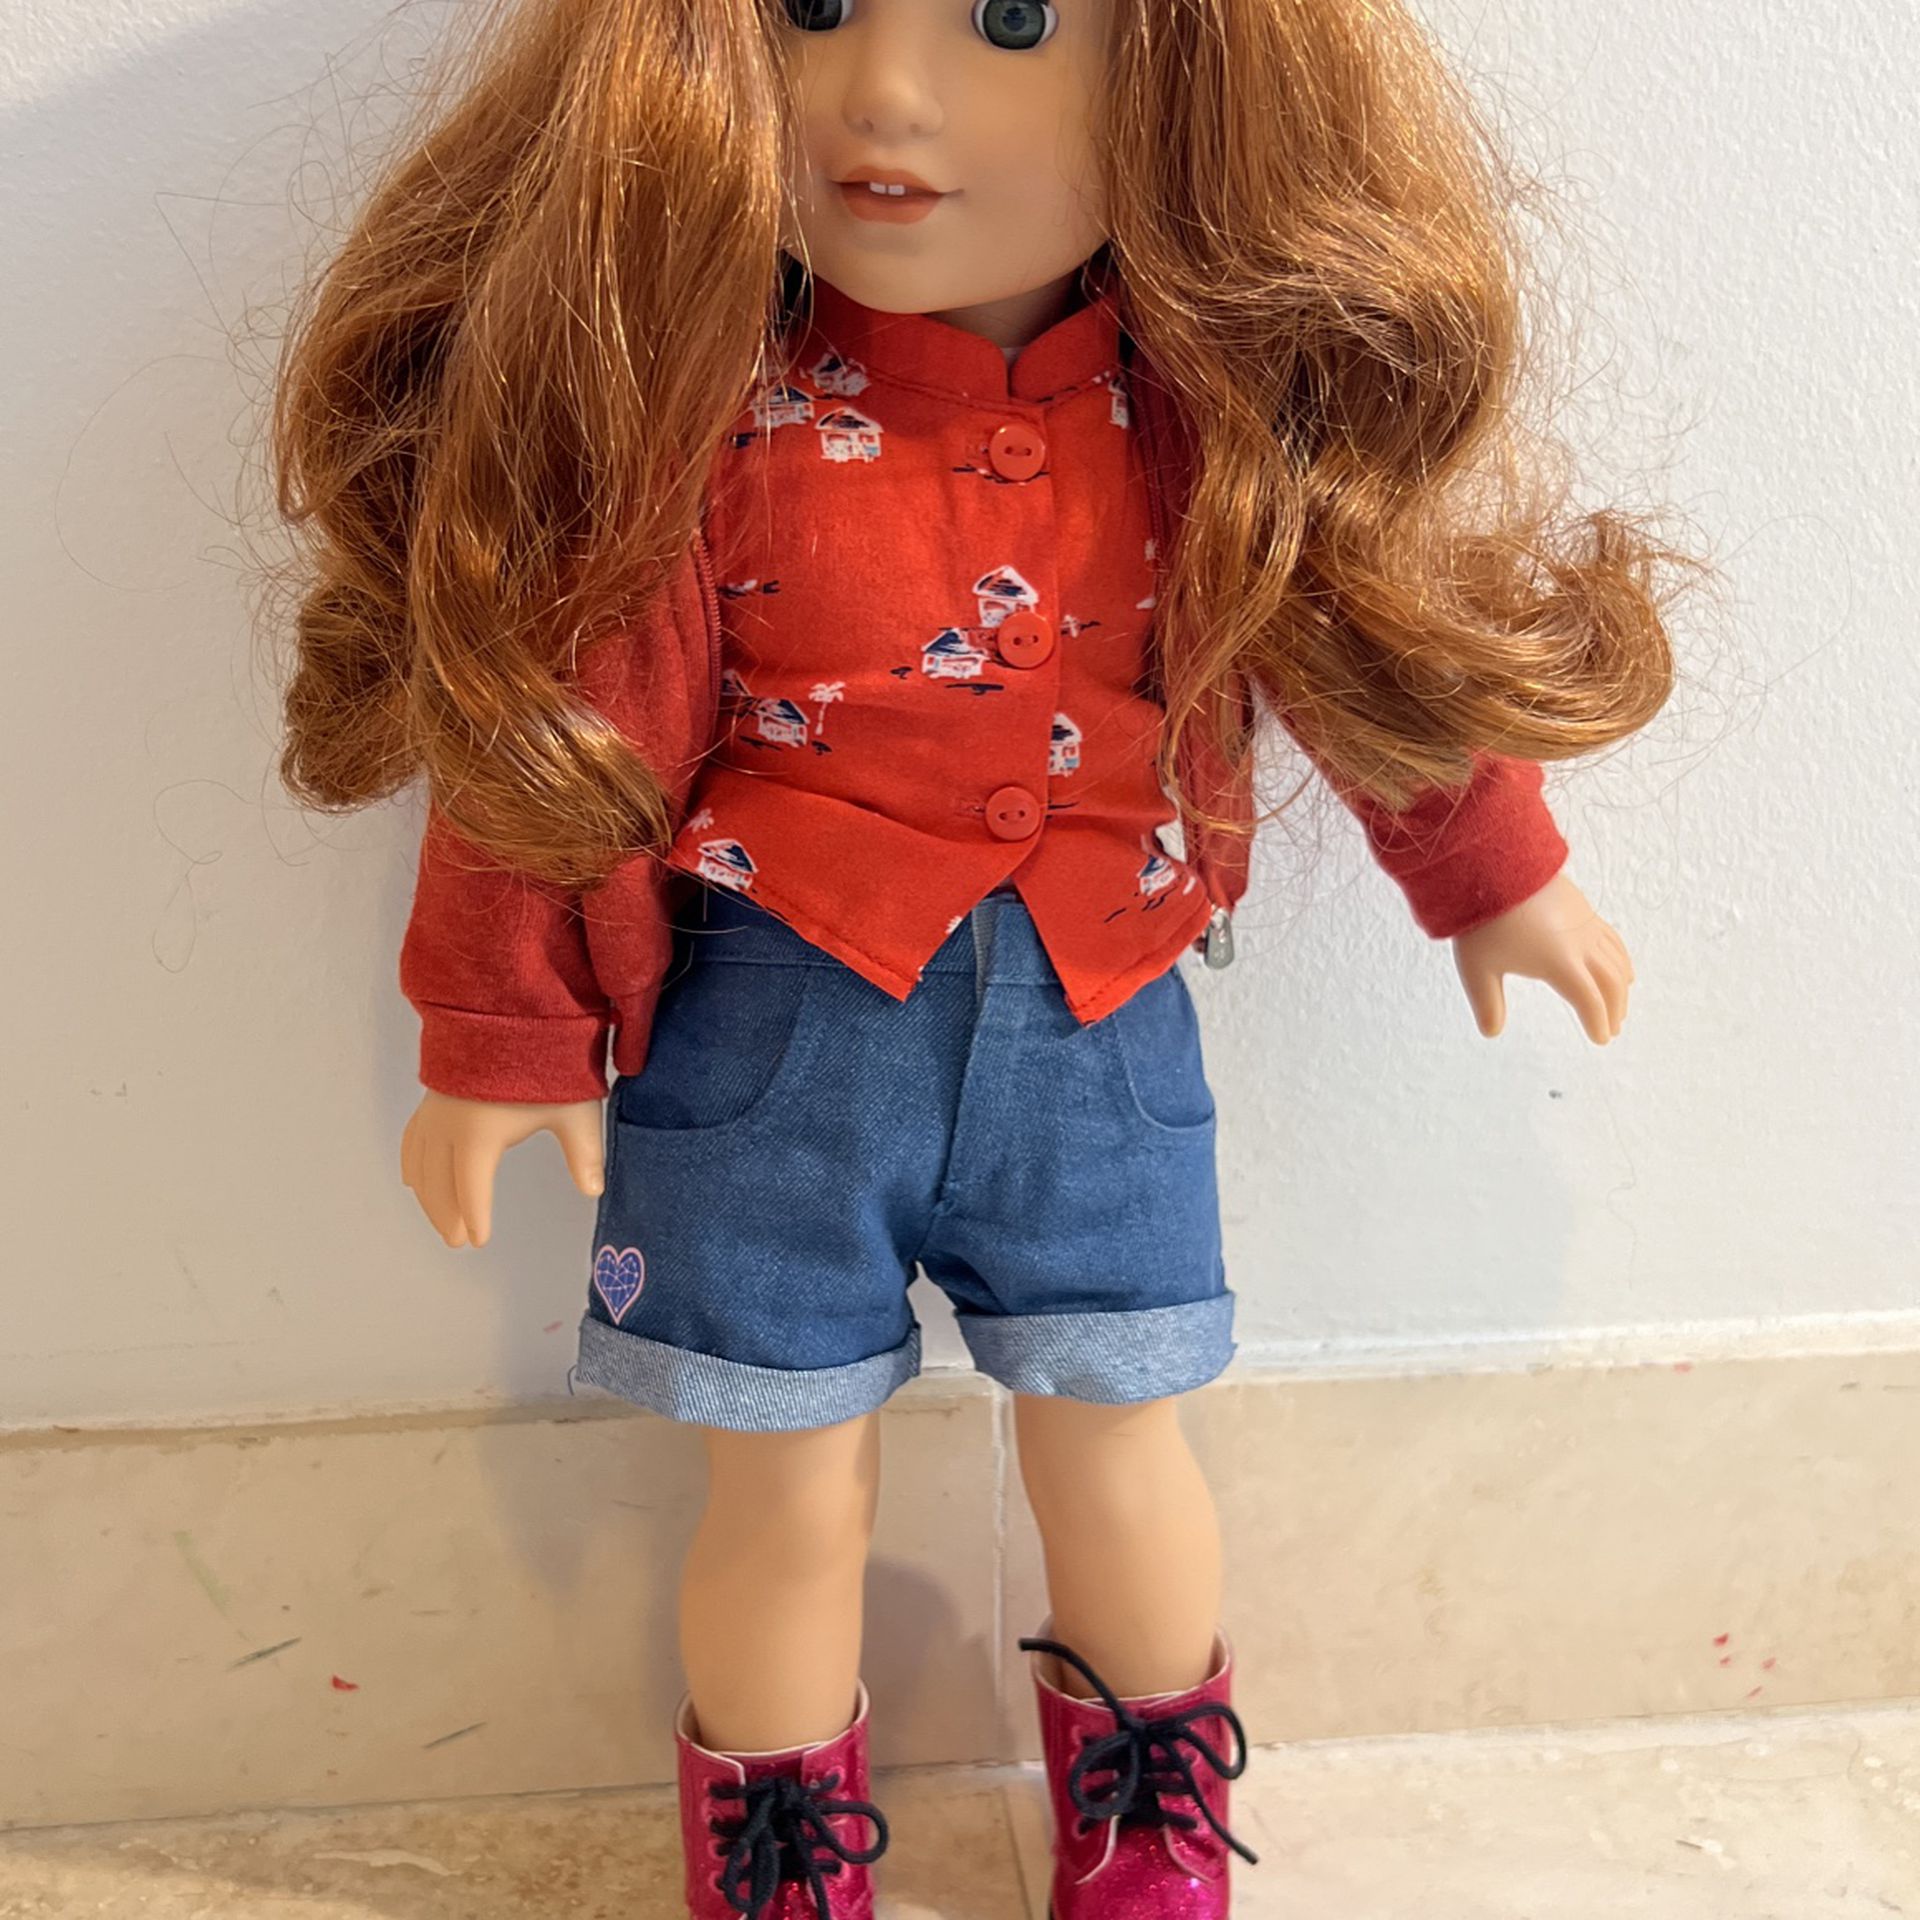 American Girl Blaire Wilson Doll 